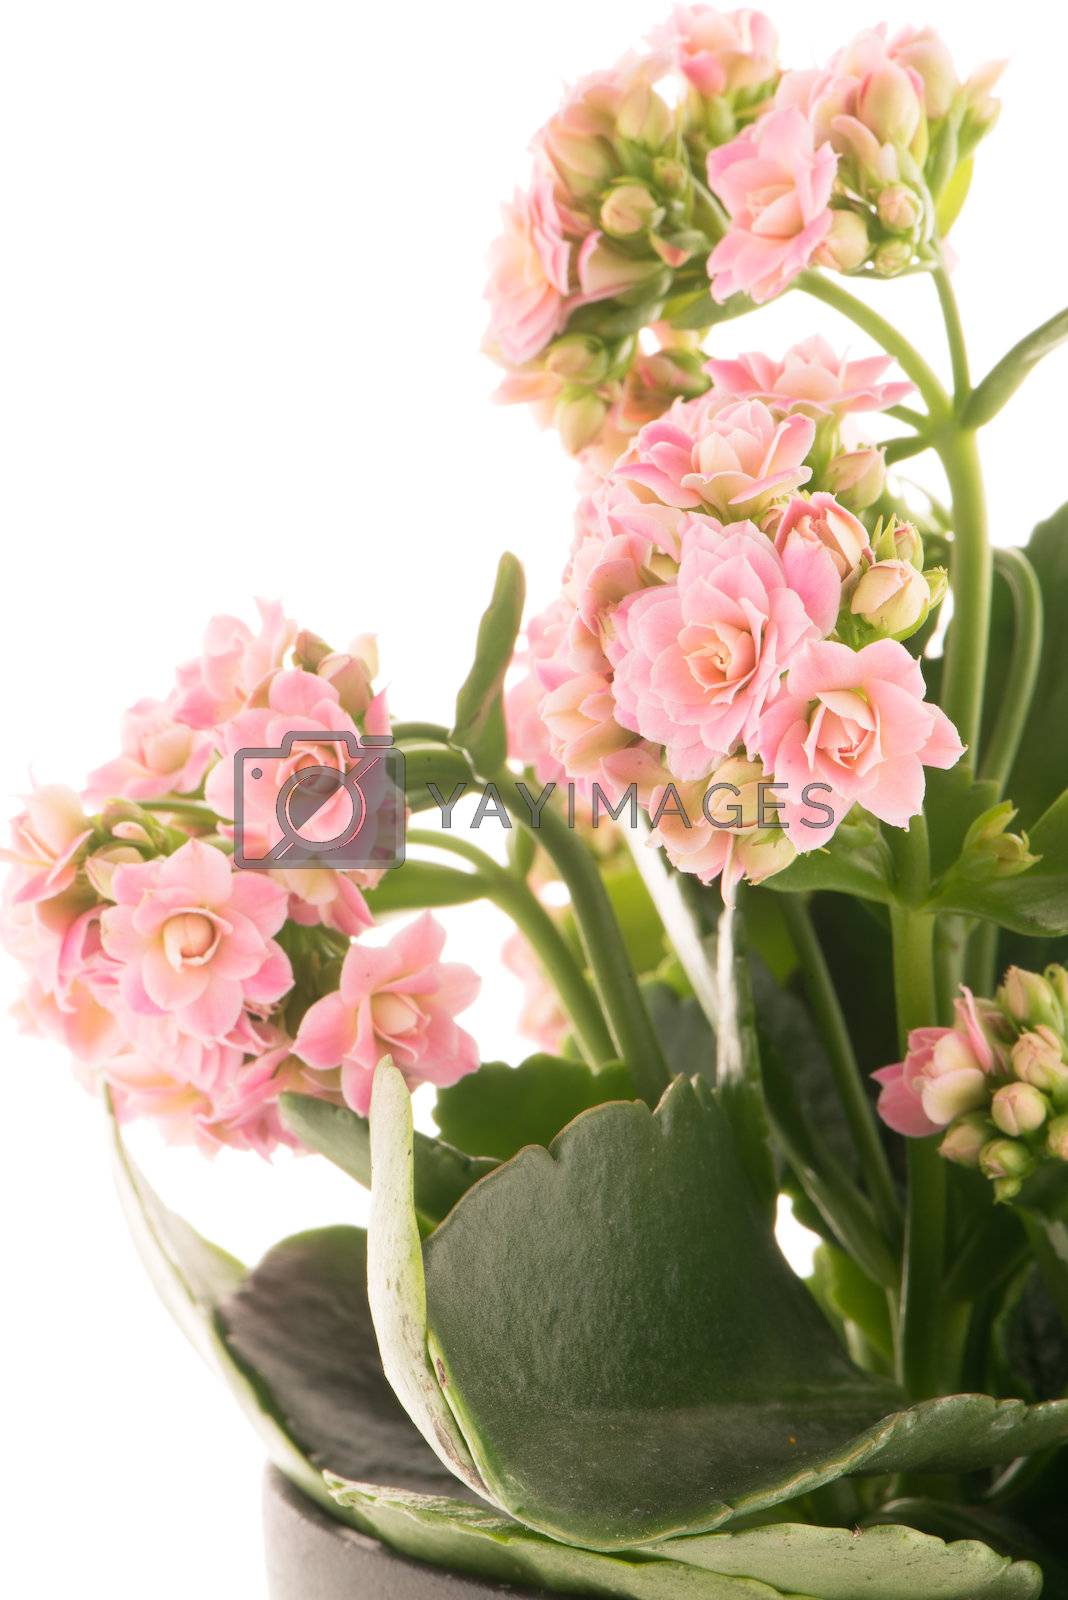 Royalty free image of Kalanchoe Calandiva flowers by homydesign